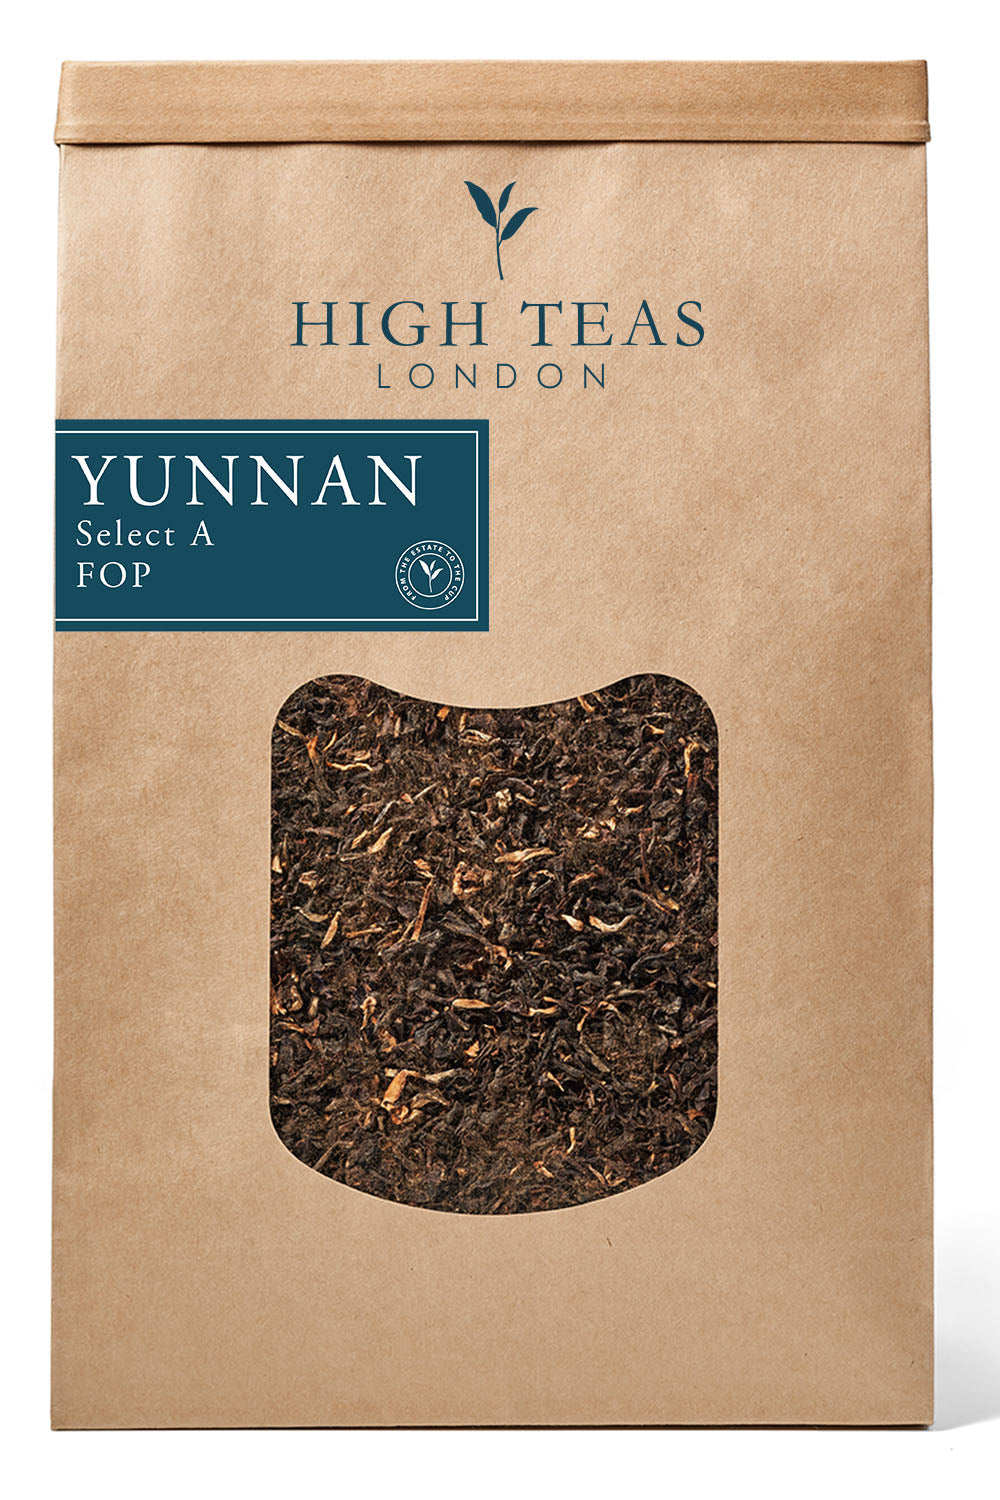 Yunnan Select A - FOP-500g-Loose Leaf Tea-High Teas